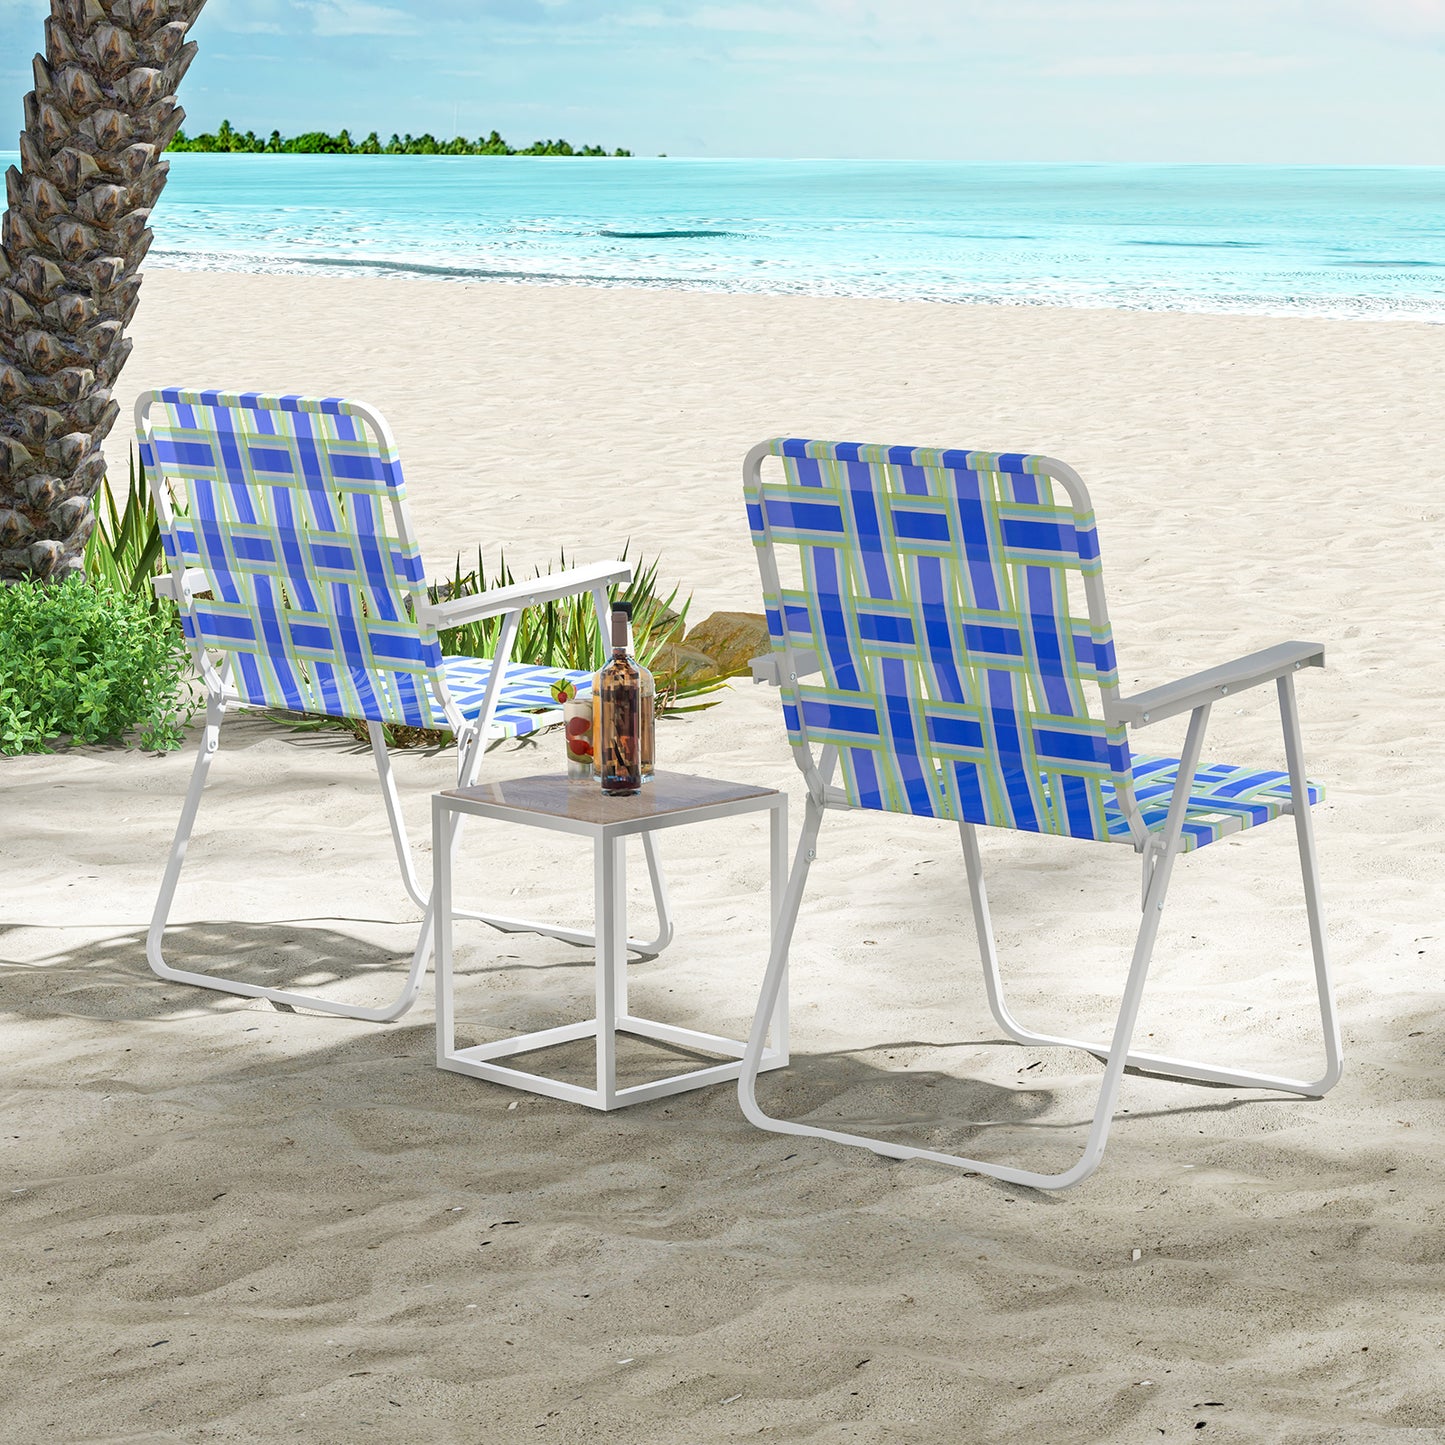 2 Pieces Folding Beach Chair Camping Lawn Webbing Chair-Blue